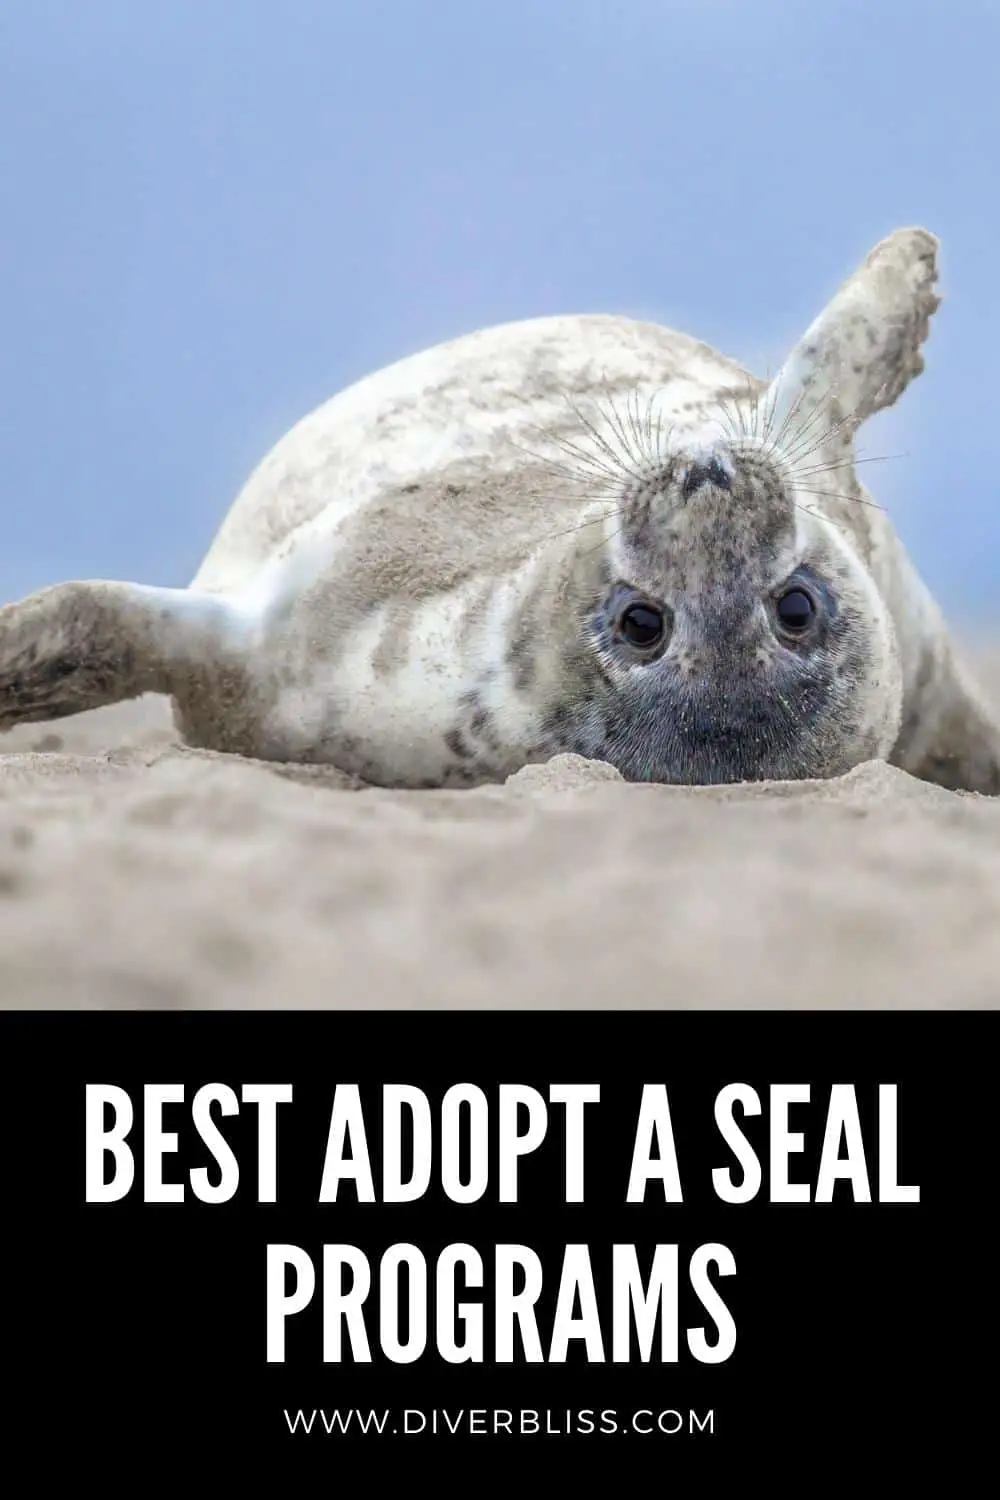 Best adopt a seal programs